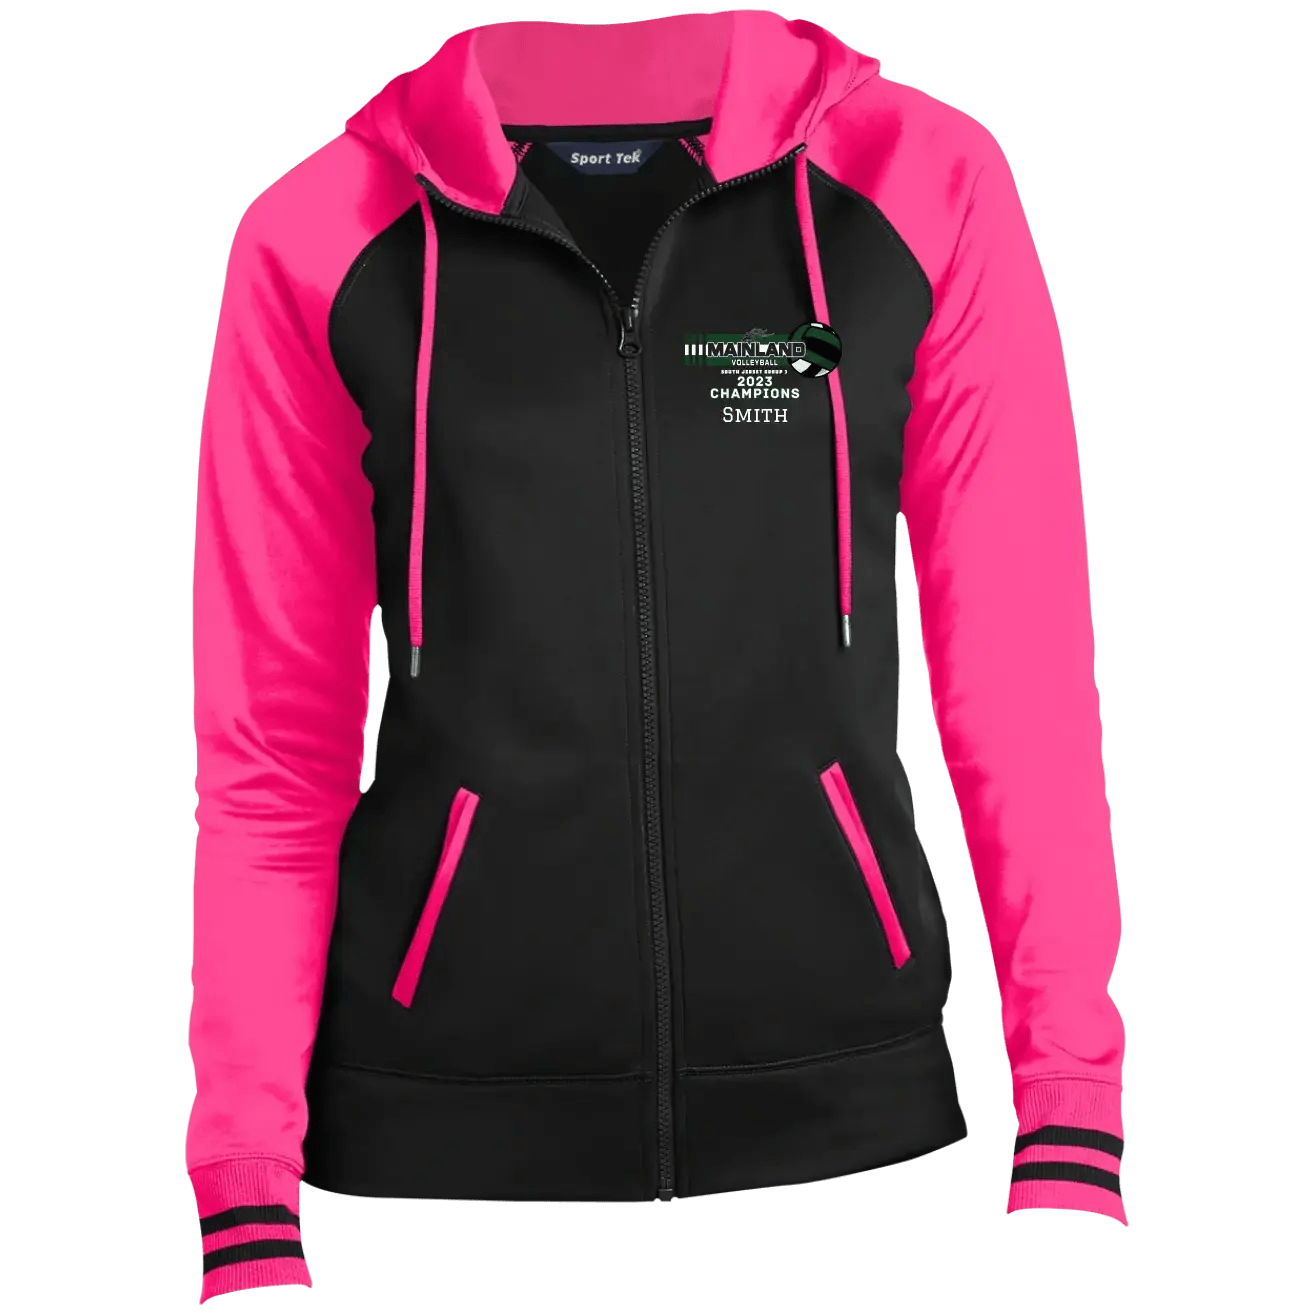 Mainland Volleyball Ladies Jackets - Shore Break Designs - Customizer